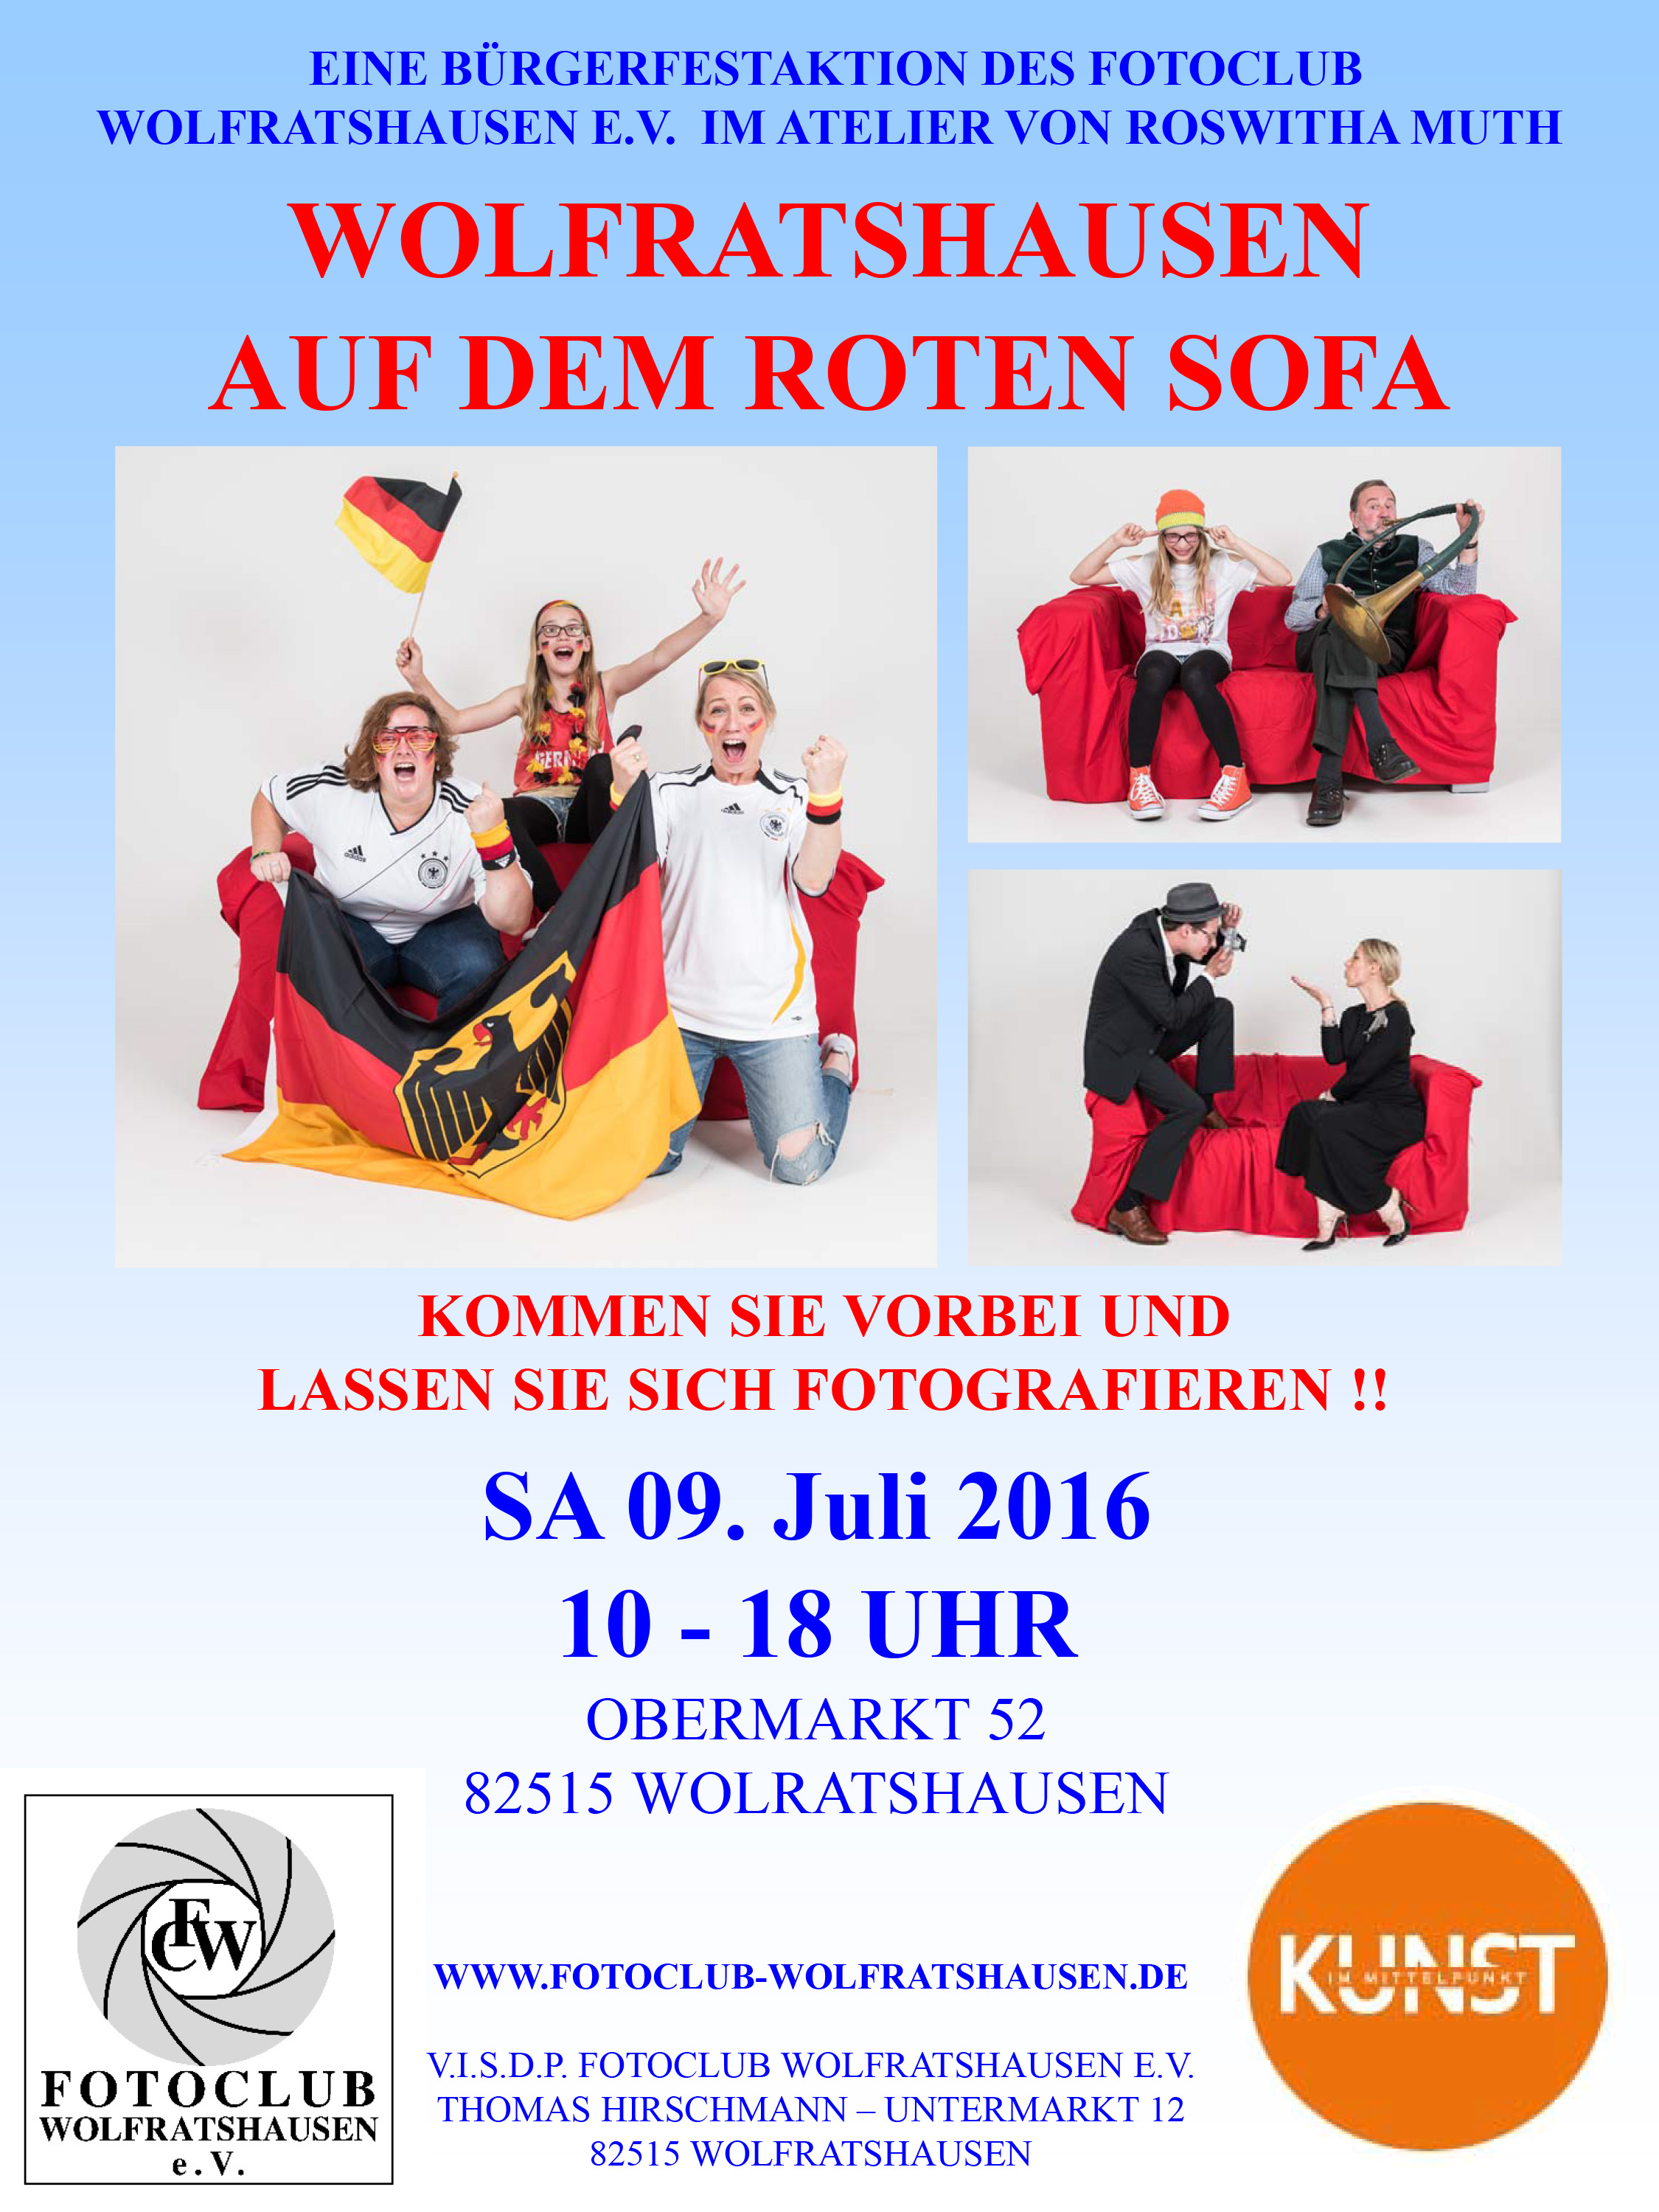 Plakat zur Aktion "Rotes Sofa" des Fotoclub Wolfratshausen in Kooperation mit dem Atelier Roswitha Muth